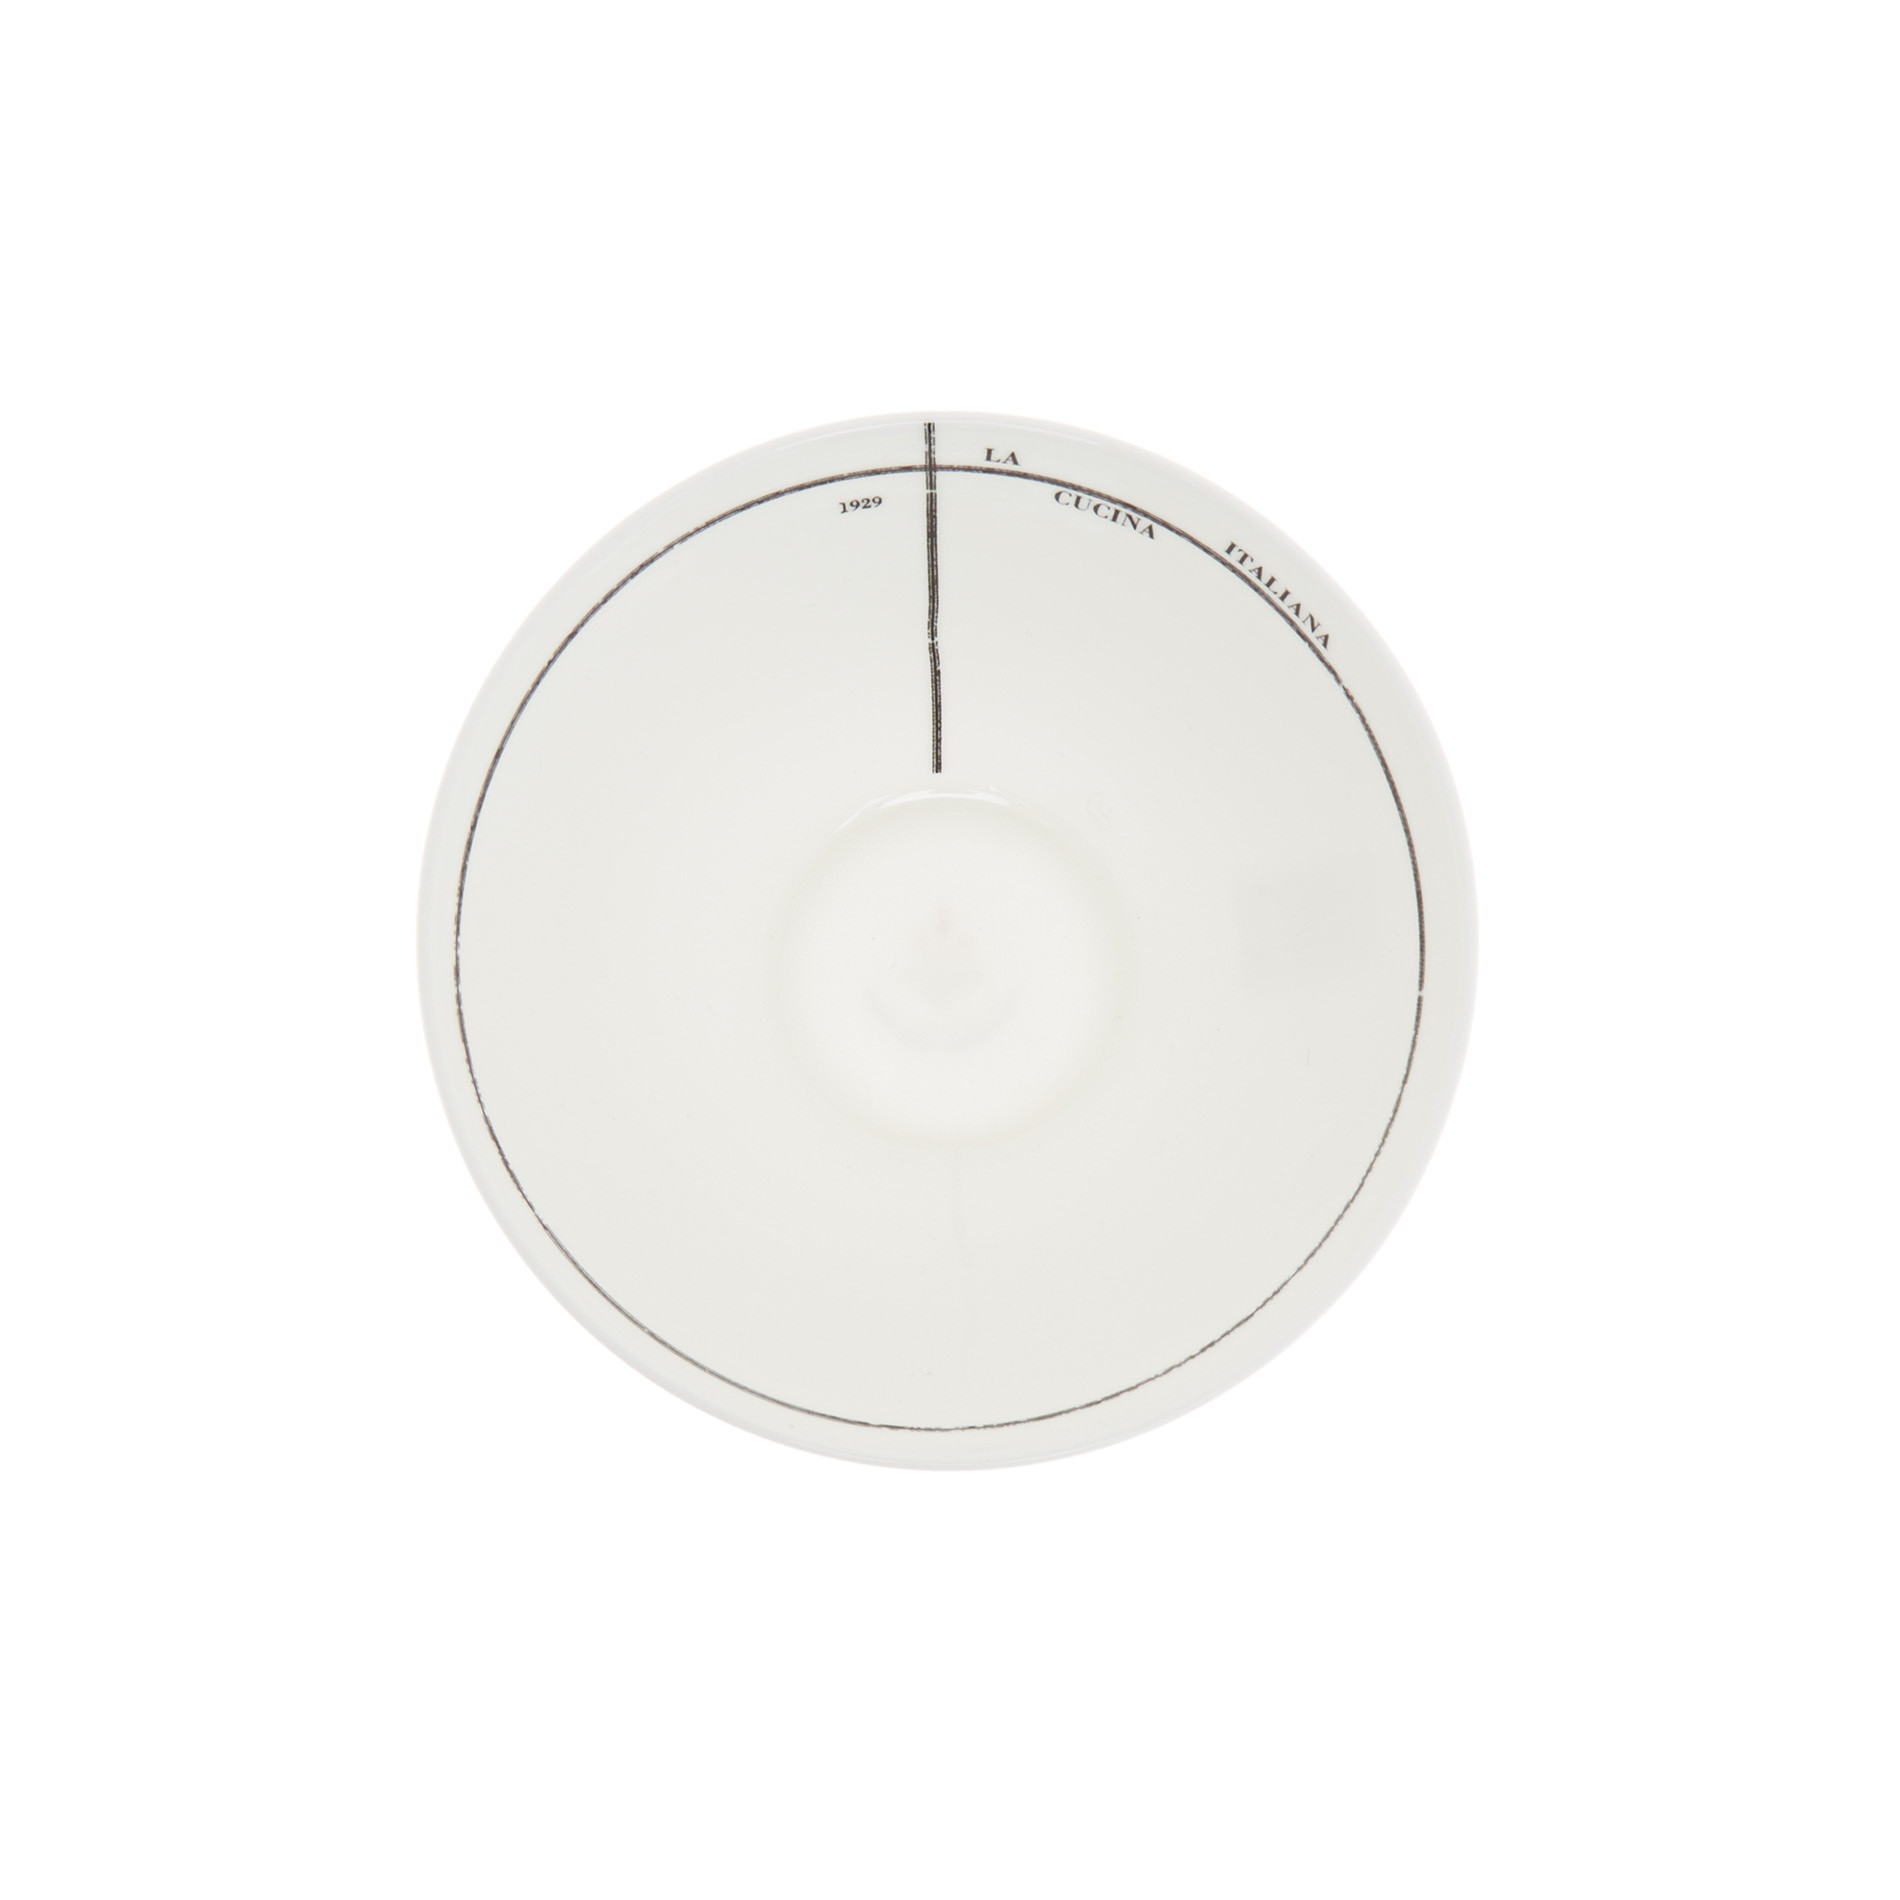 Small fine bone china bowl with geometric La Cucina Italiana decoration, White, large image number 1